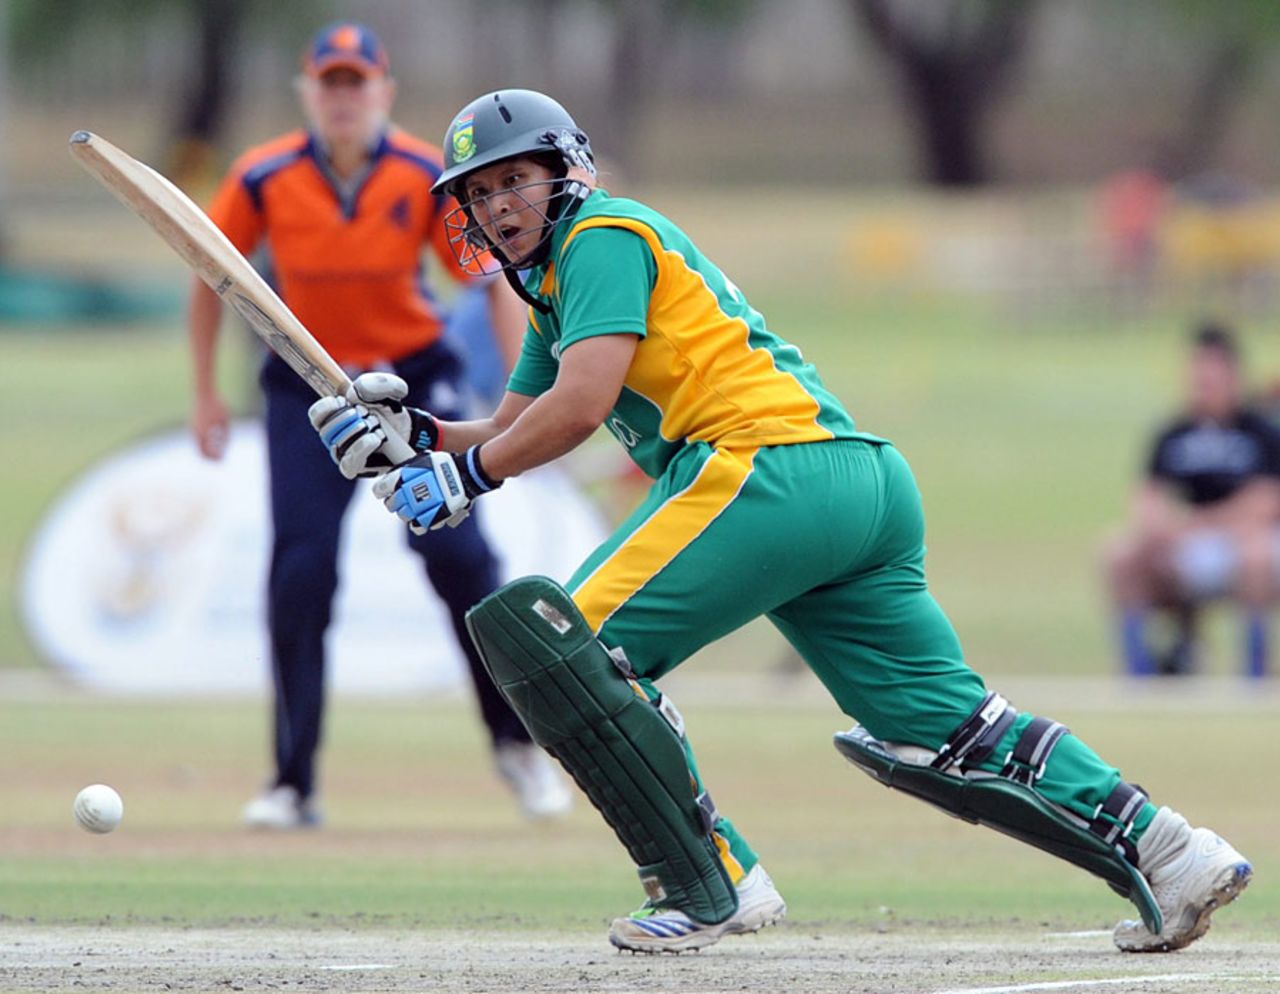 Shandre Fritz's 116 not out was the highest Women's Twenty20 International score, South Africa v Netherlands, ICC Women's Cricket Twenty20 Challenge, October 14, 2010